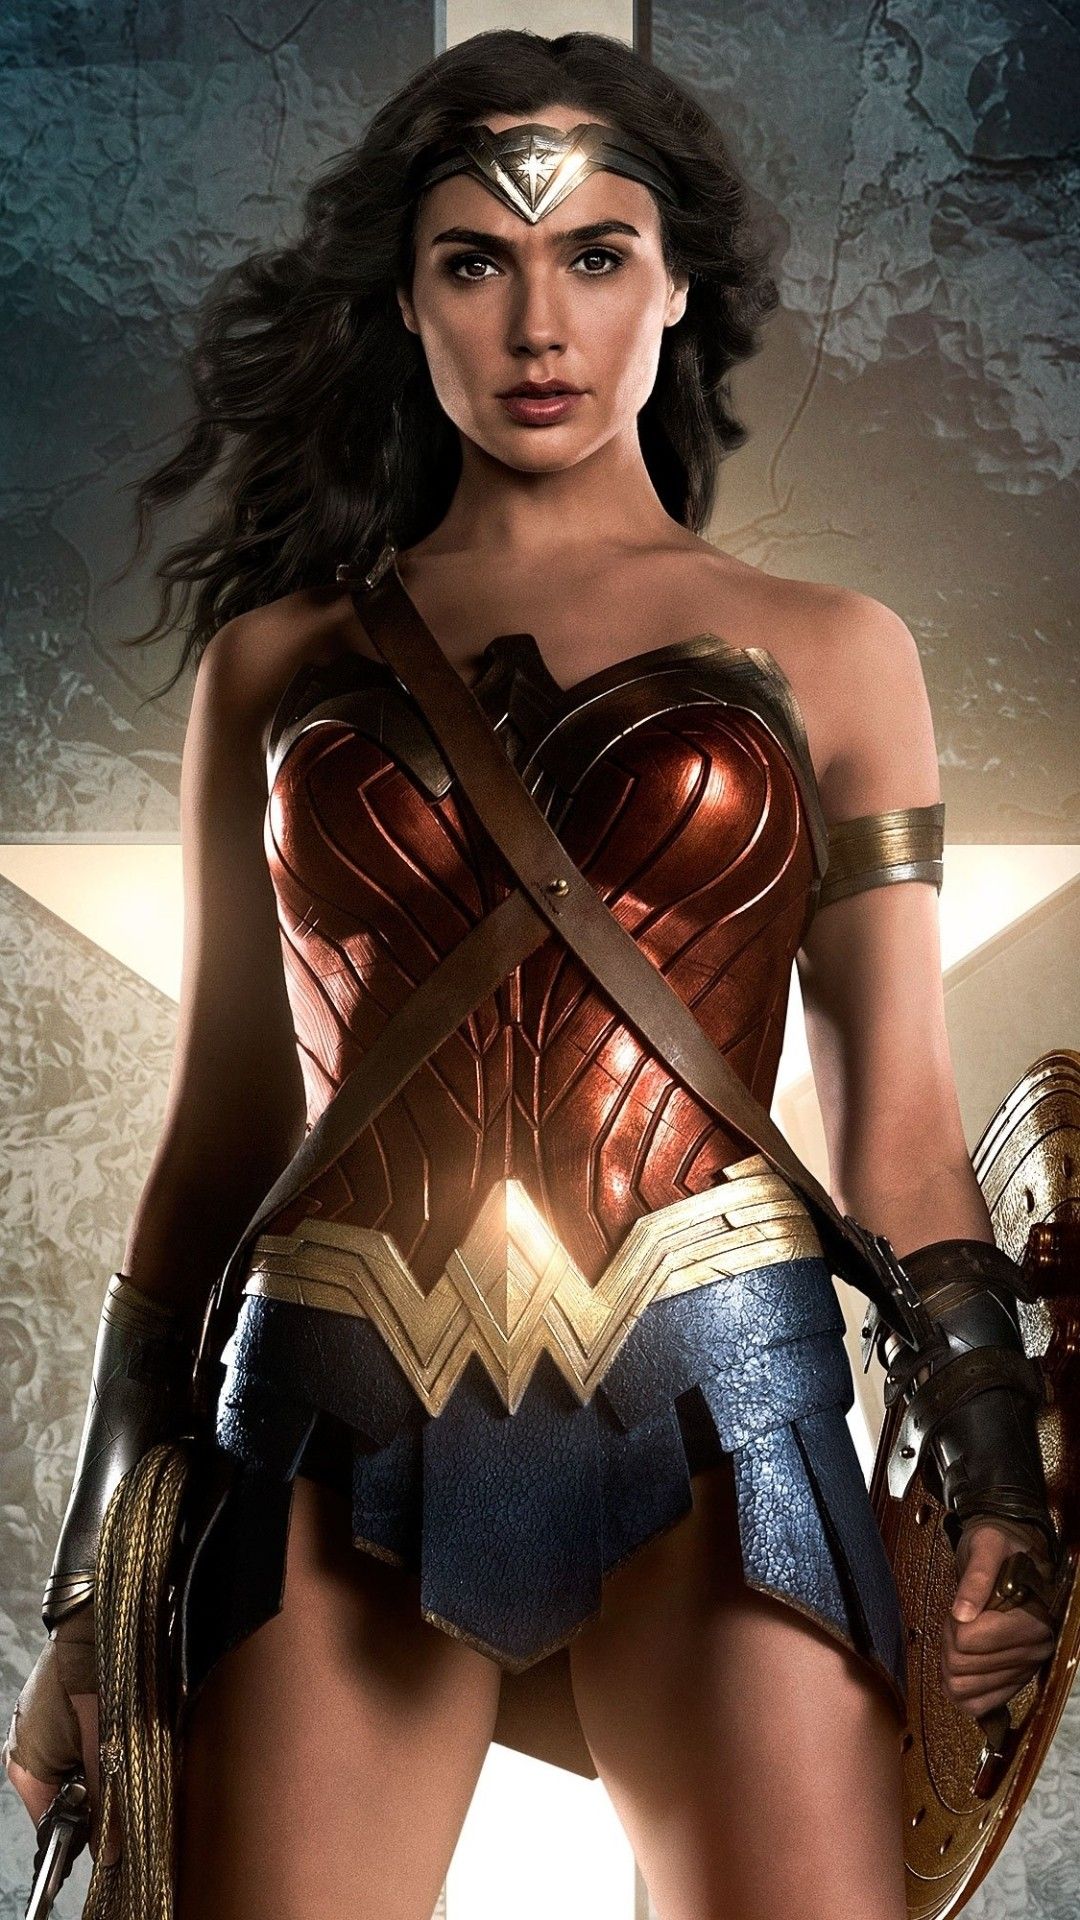 Wonder Woman Phone Background